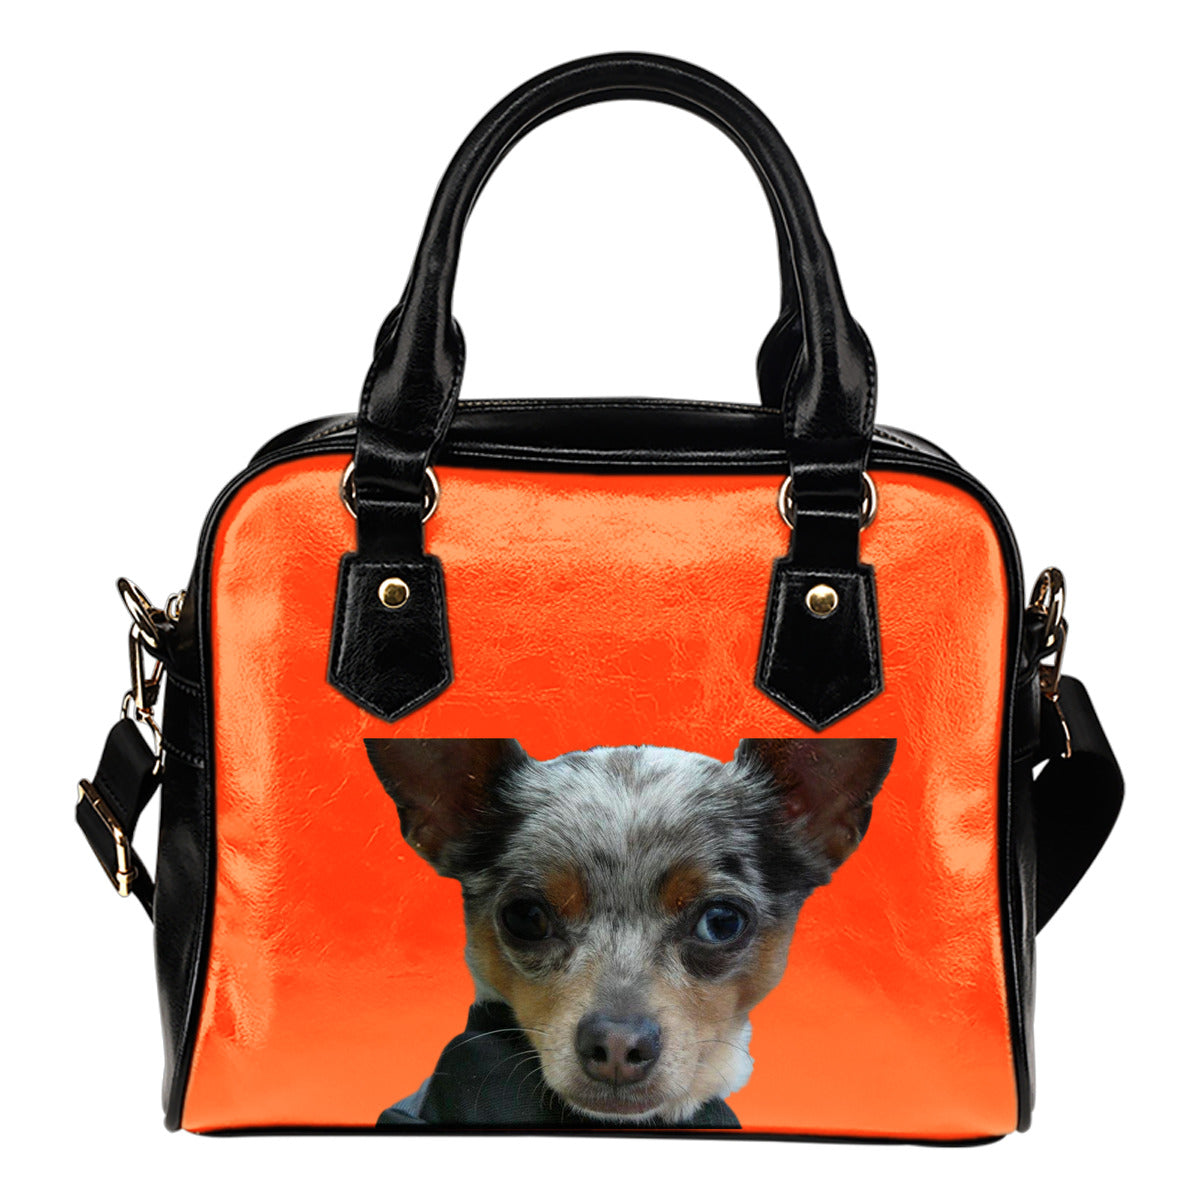 Chihuahua Shoulder Bag - Blue Merle Orange